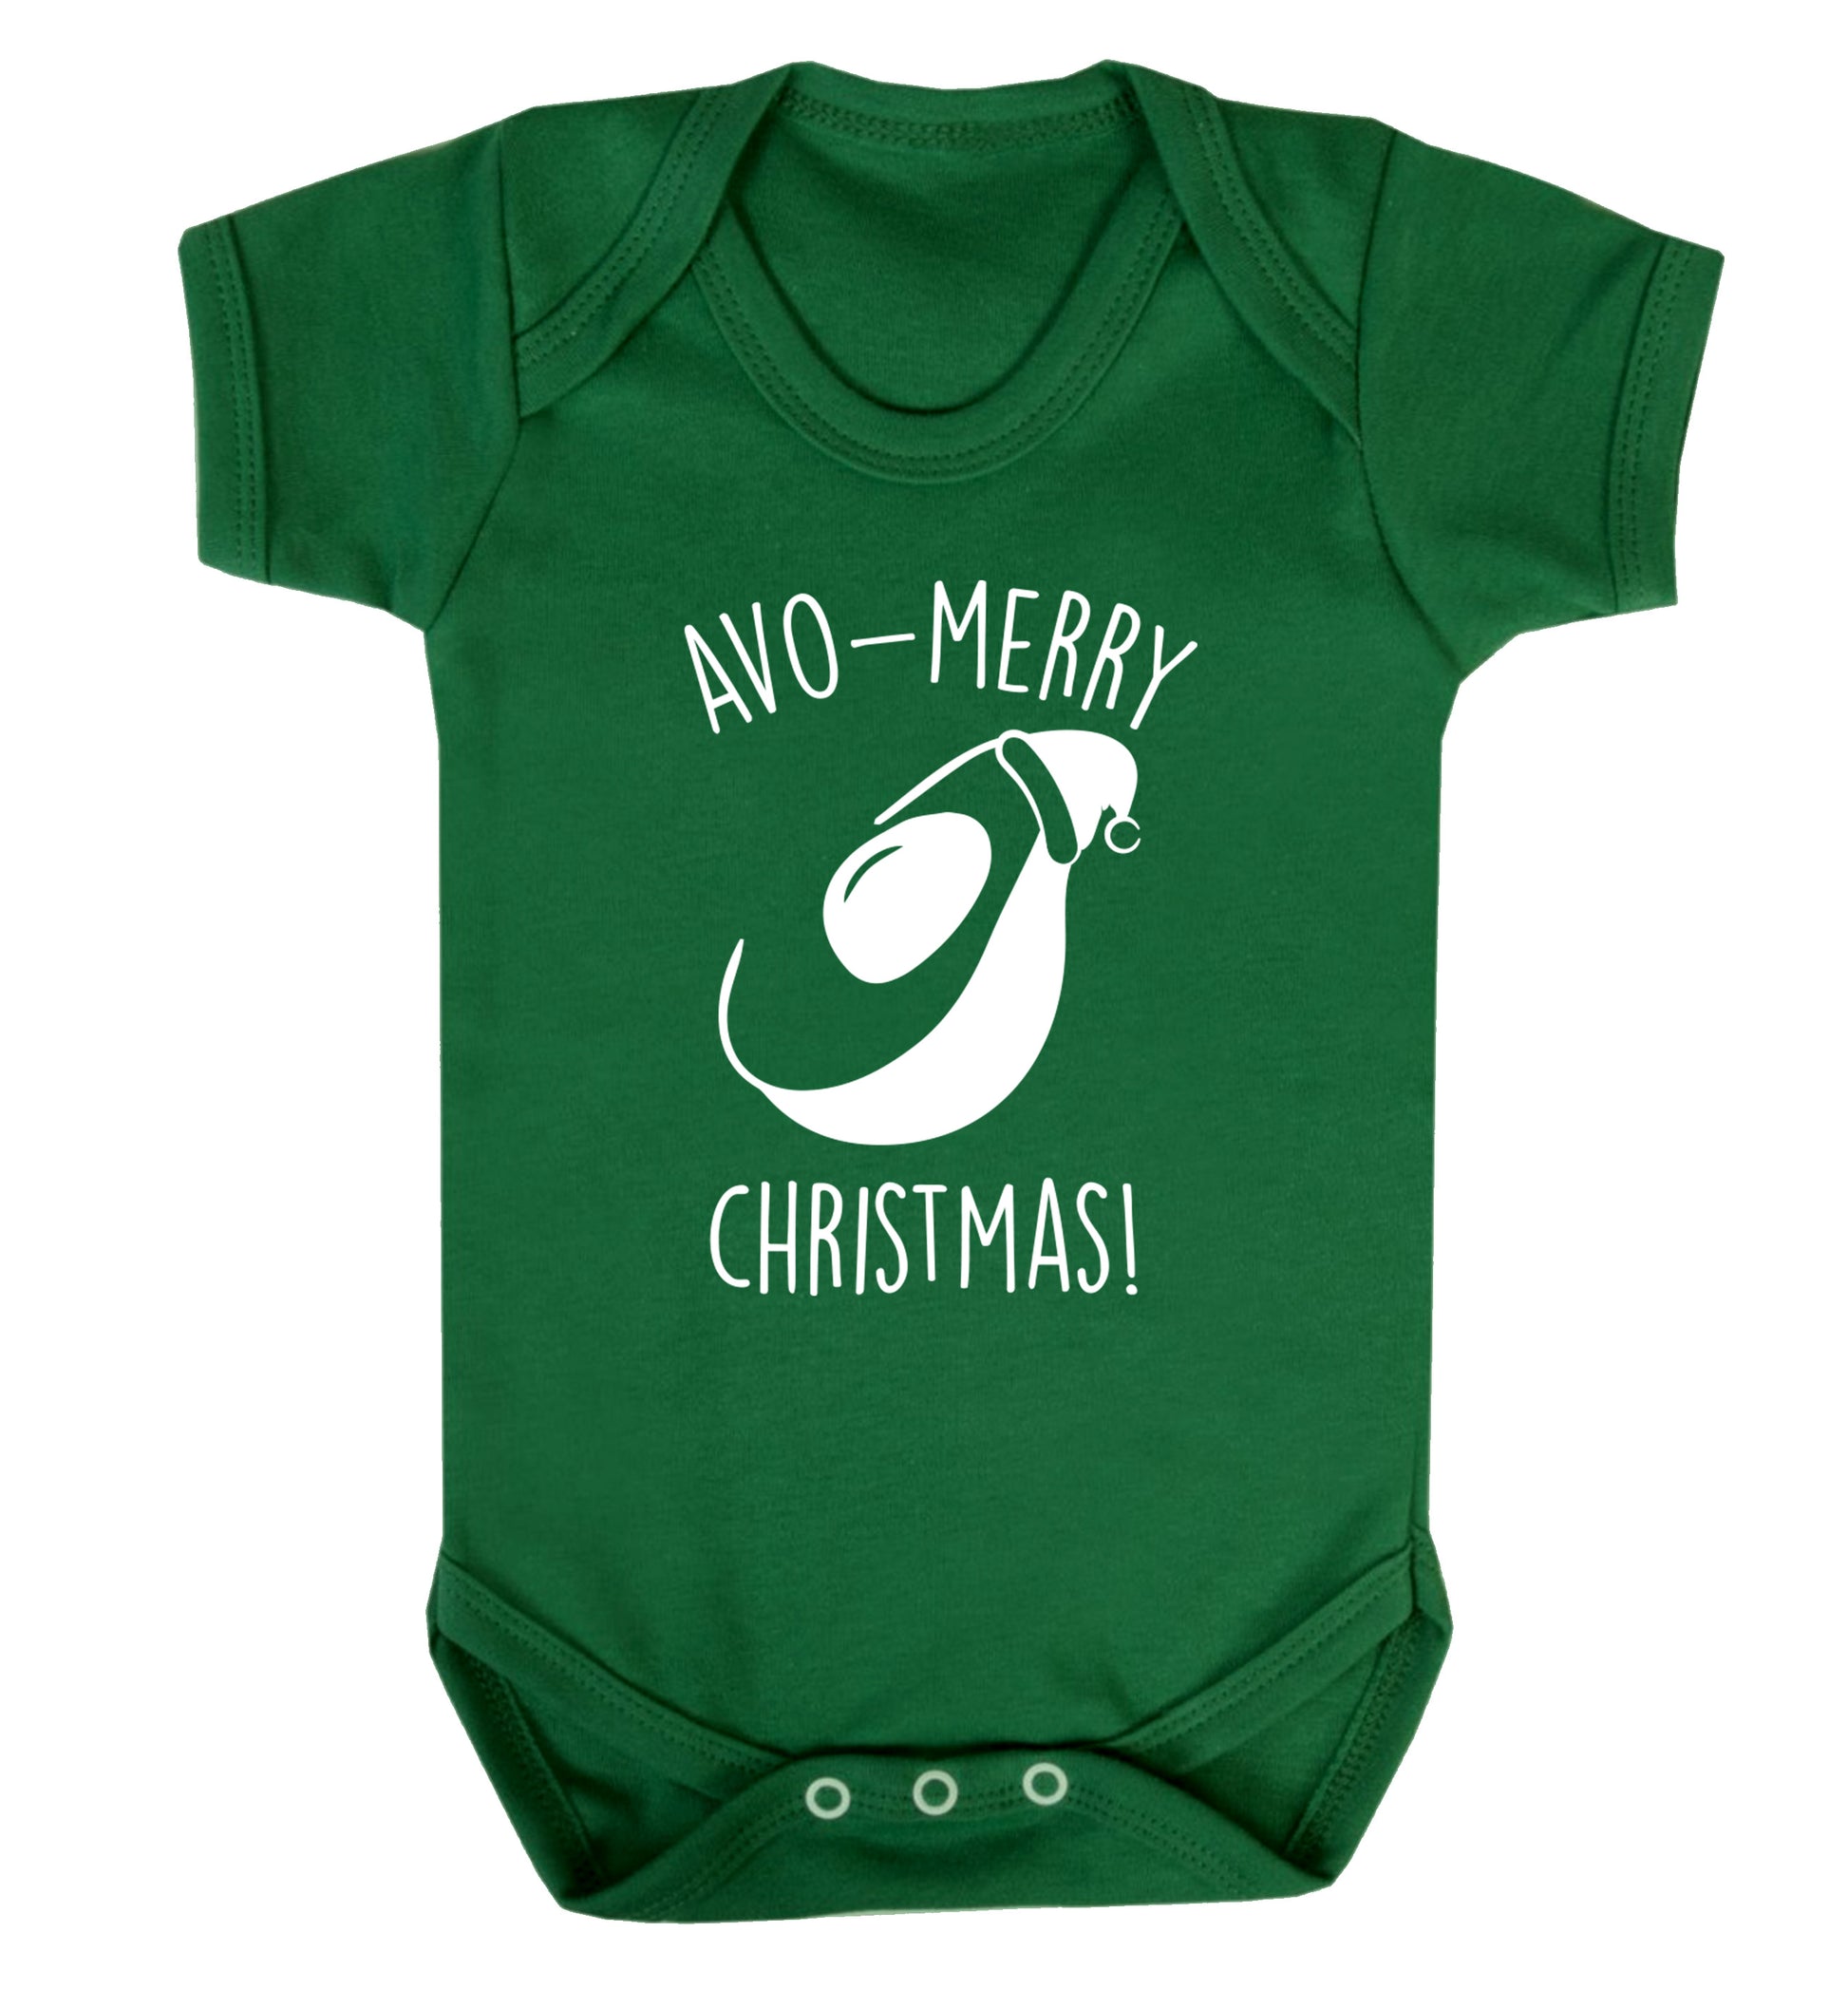 Avo-Merry Christmas Baby Vest green 18-24 months